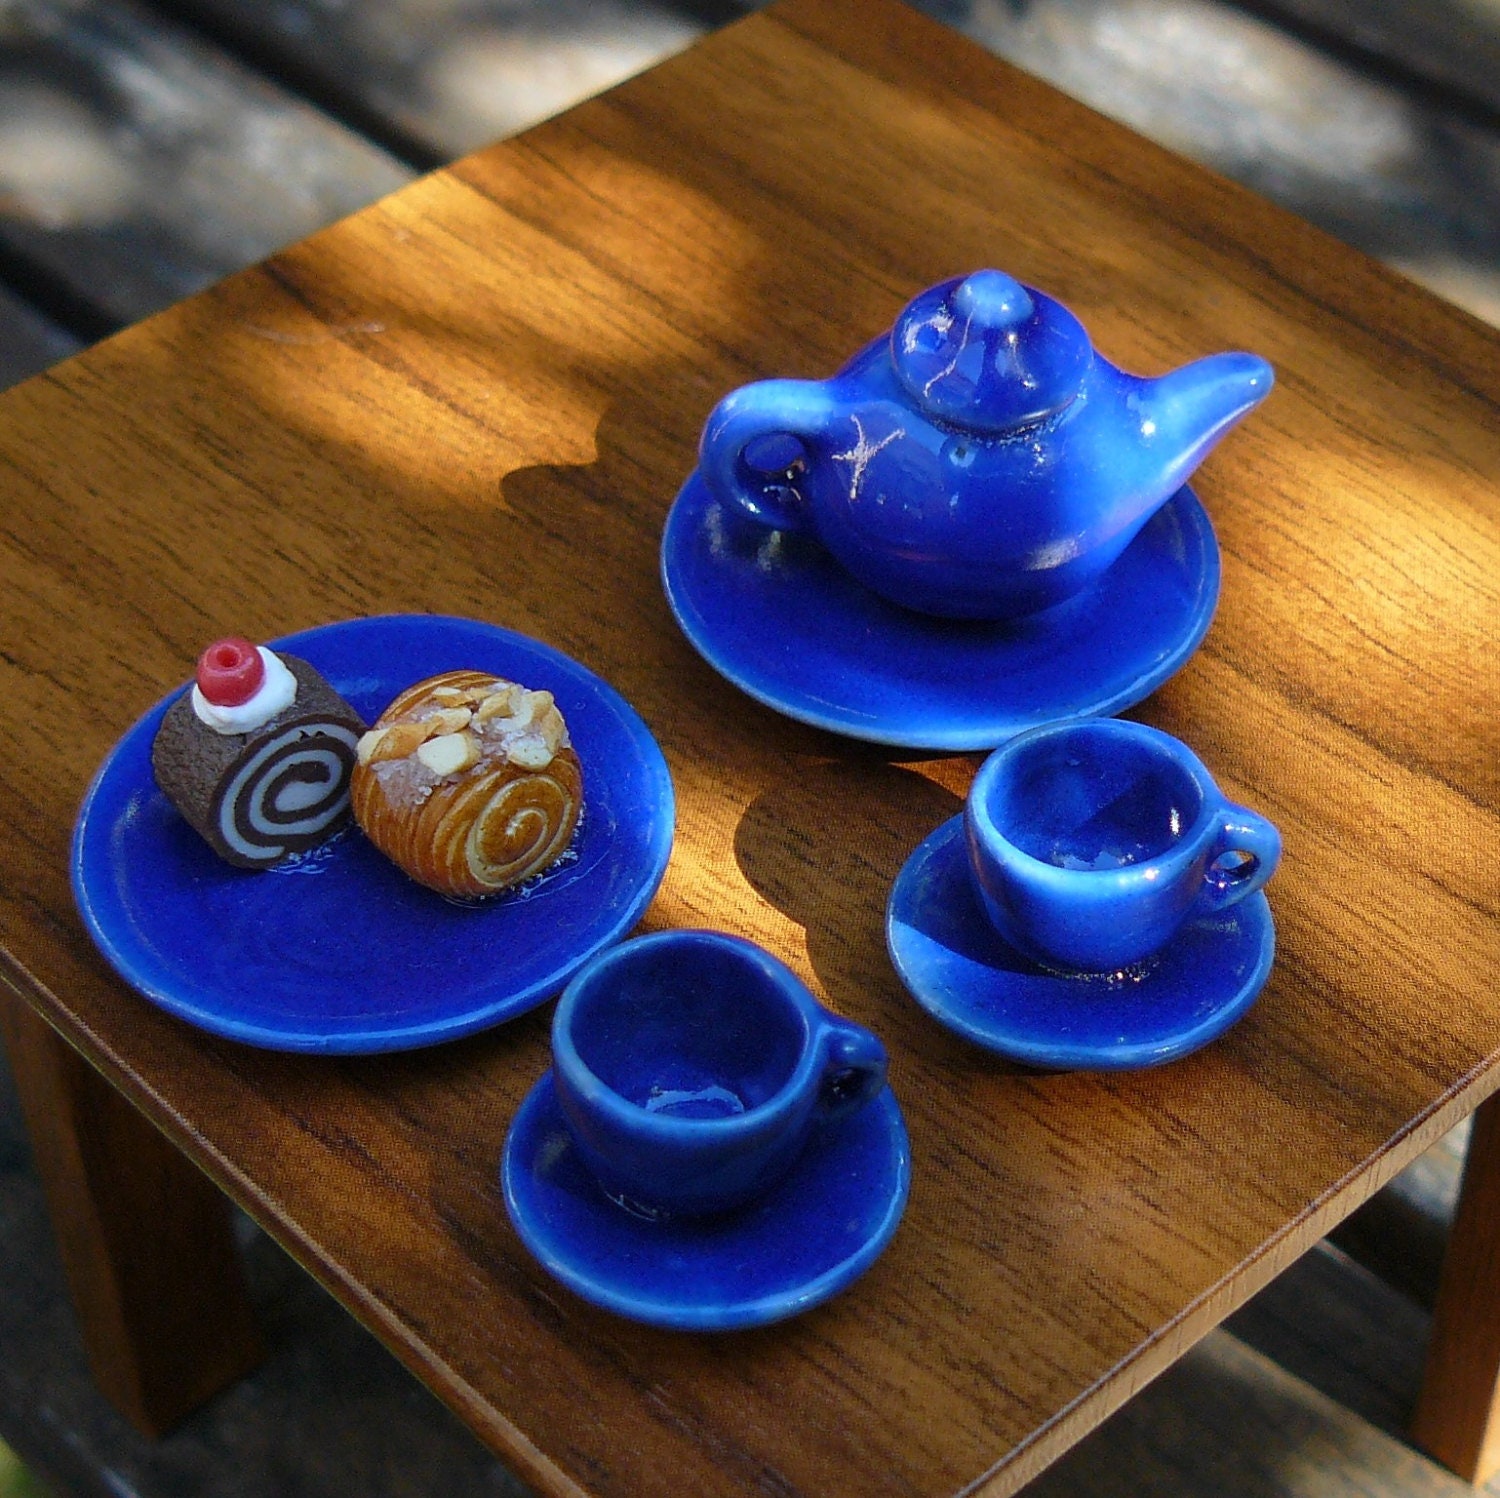 Tea Pastry Set Polymer Clay & Ceramic Glaze Miniature Dolls House